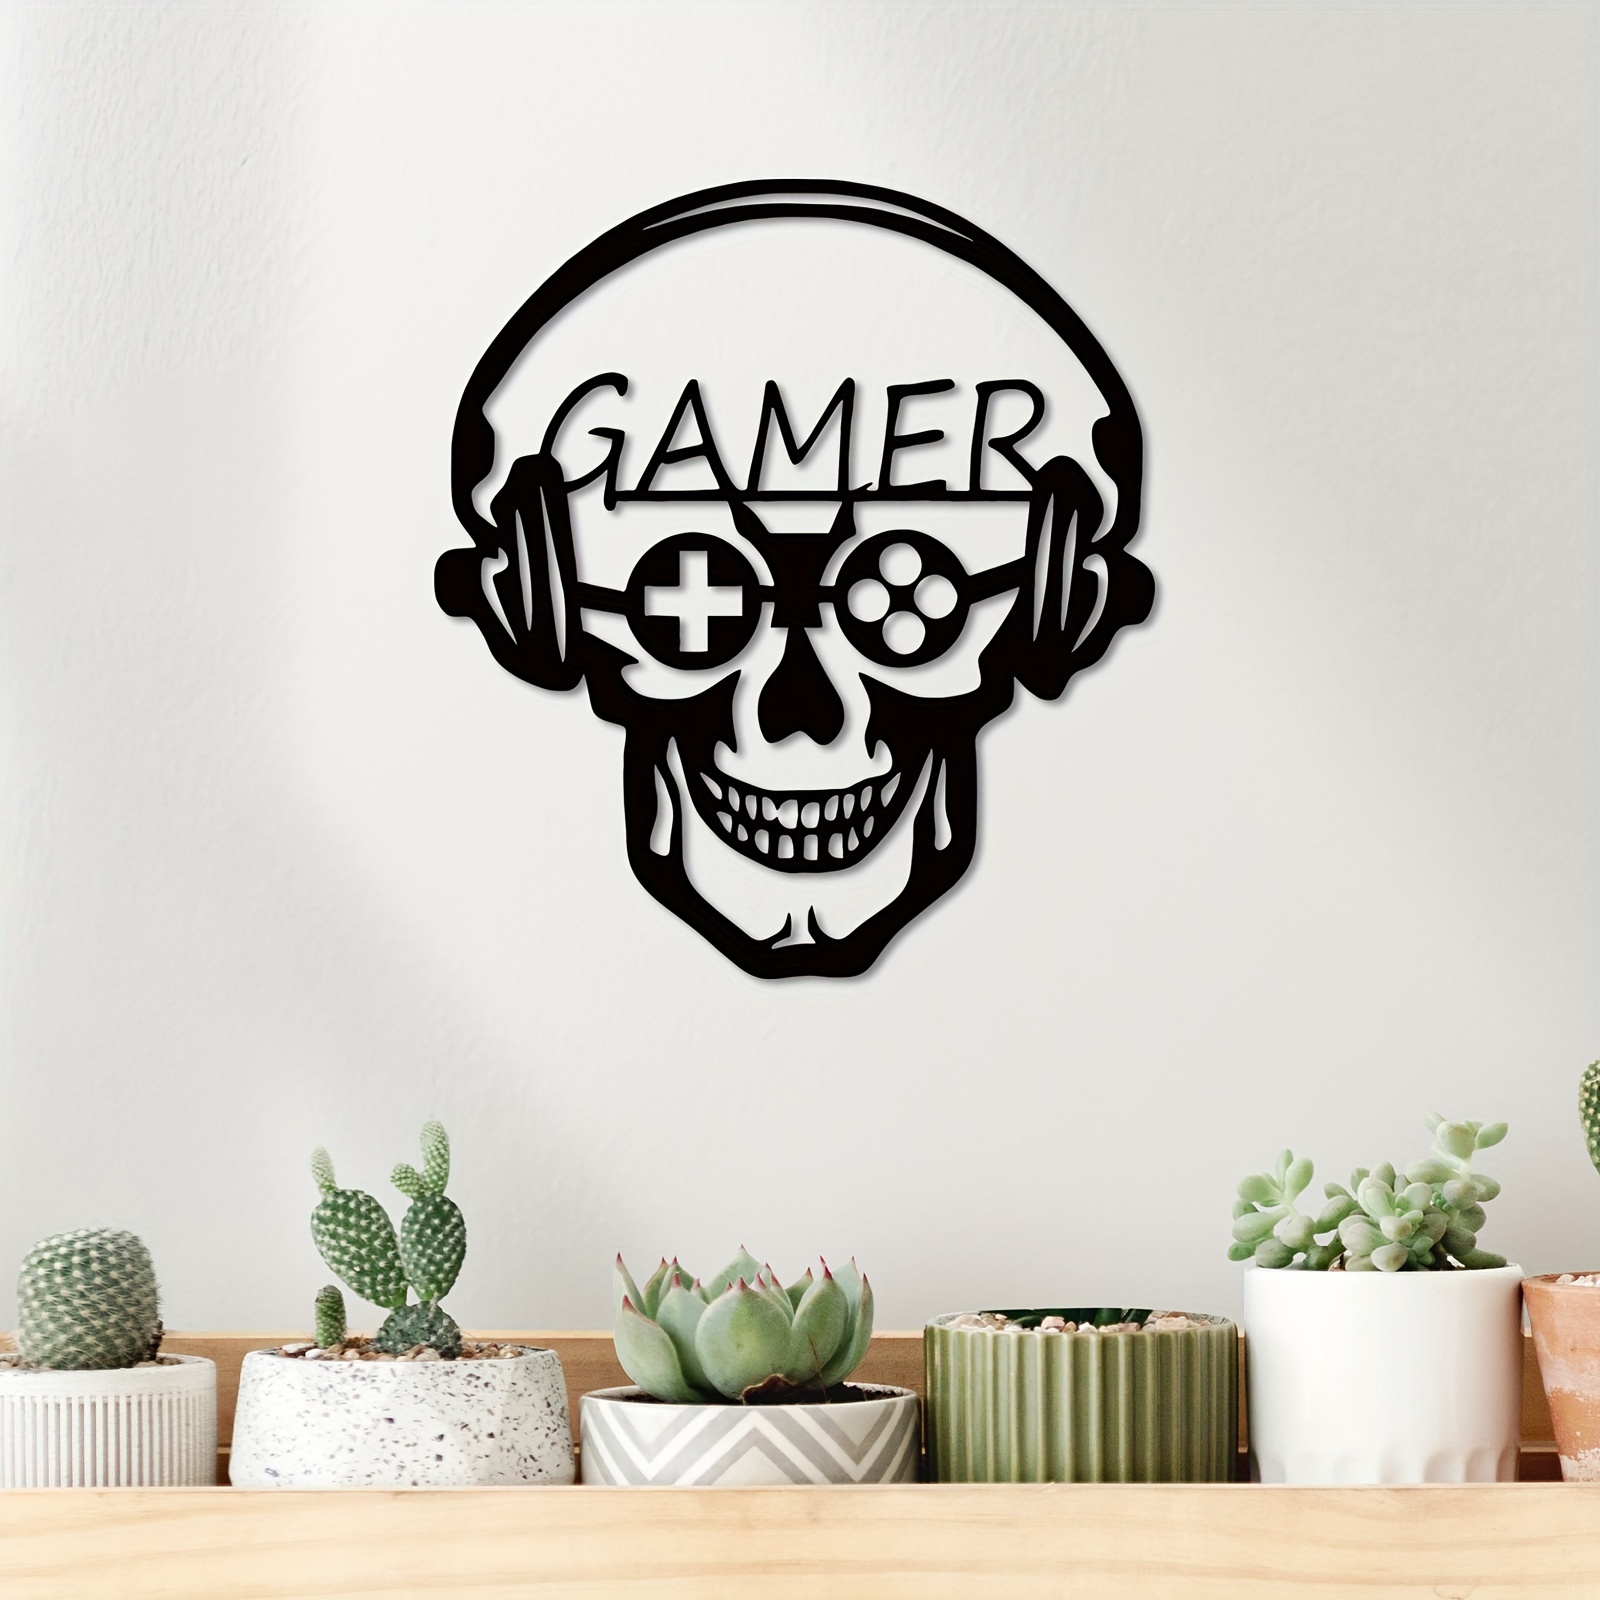 Gamer Wall Sticker, Game Zone, Loading, Gamer, Wall Stickers, Wall Decals, Gamer  Decals, Gaming Room, Gift, Gamer Wall Decal, Gamer Decor 